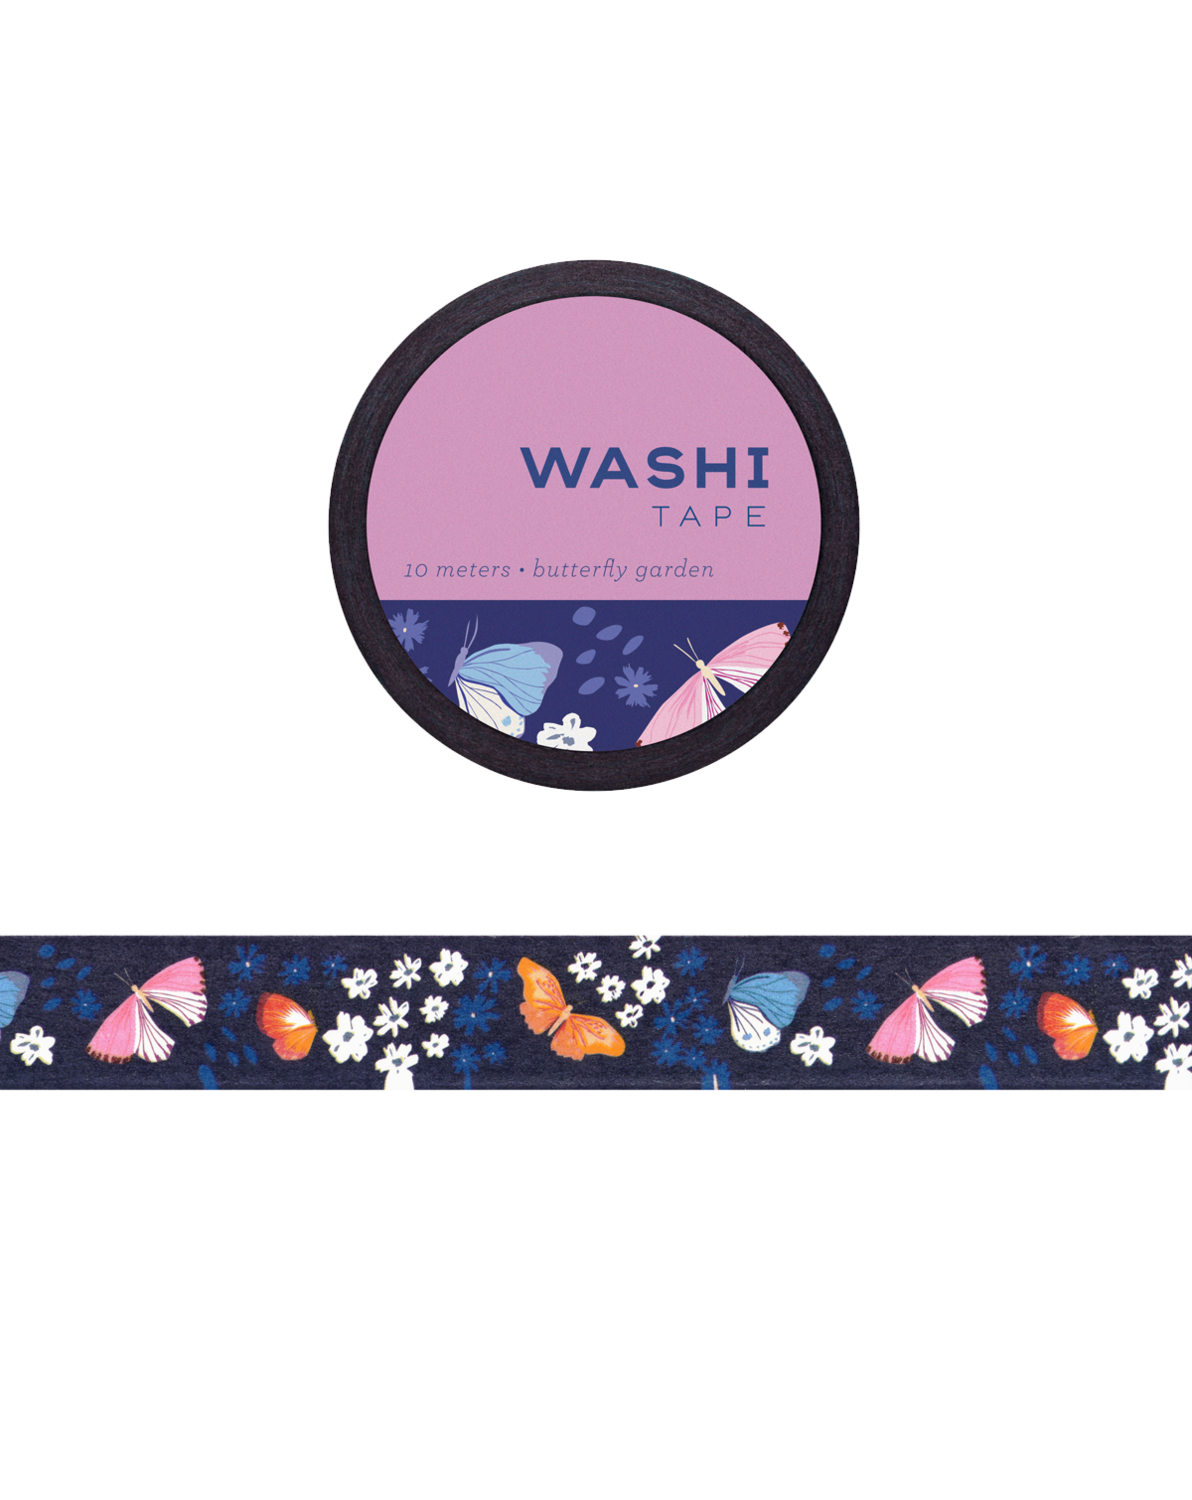 Set of 10 Washi Tapes, Washi Tape Set, Peach Washi Tape, Leaf Washi Tape,  Blue Washi Tape, Thin Washi Tape, 5MM Washi Tape 